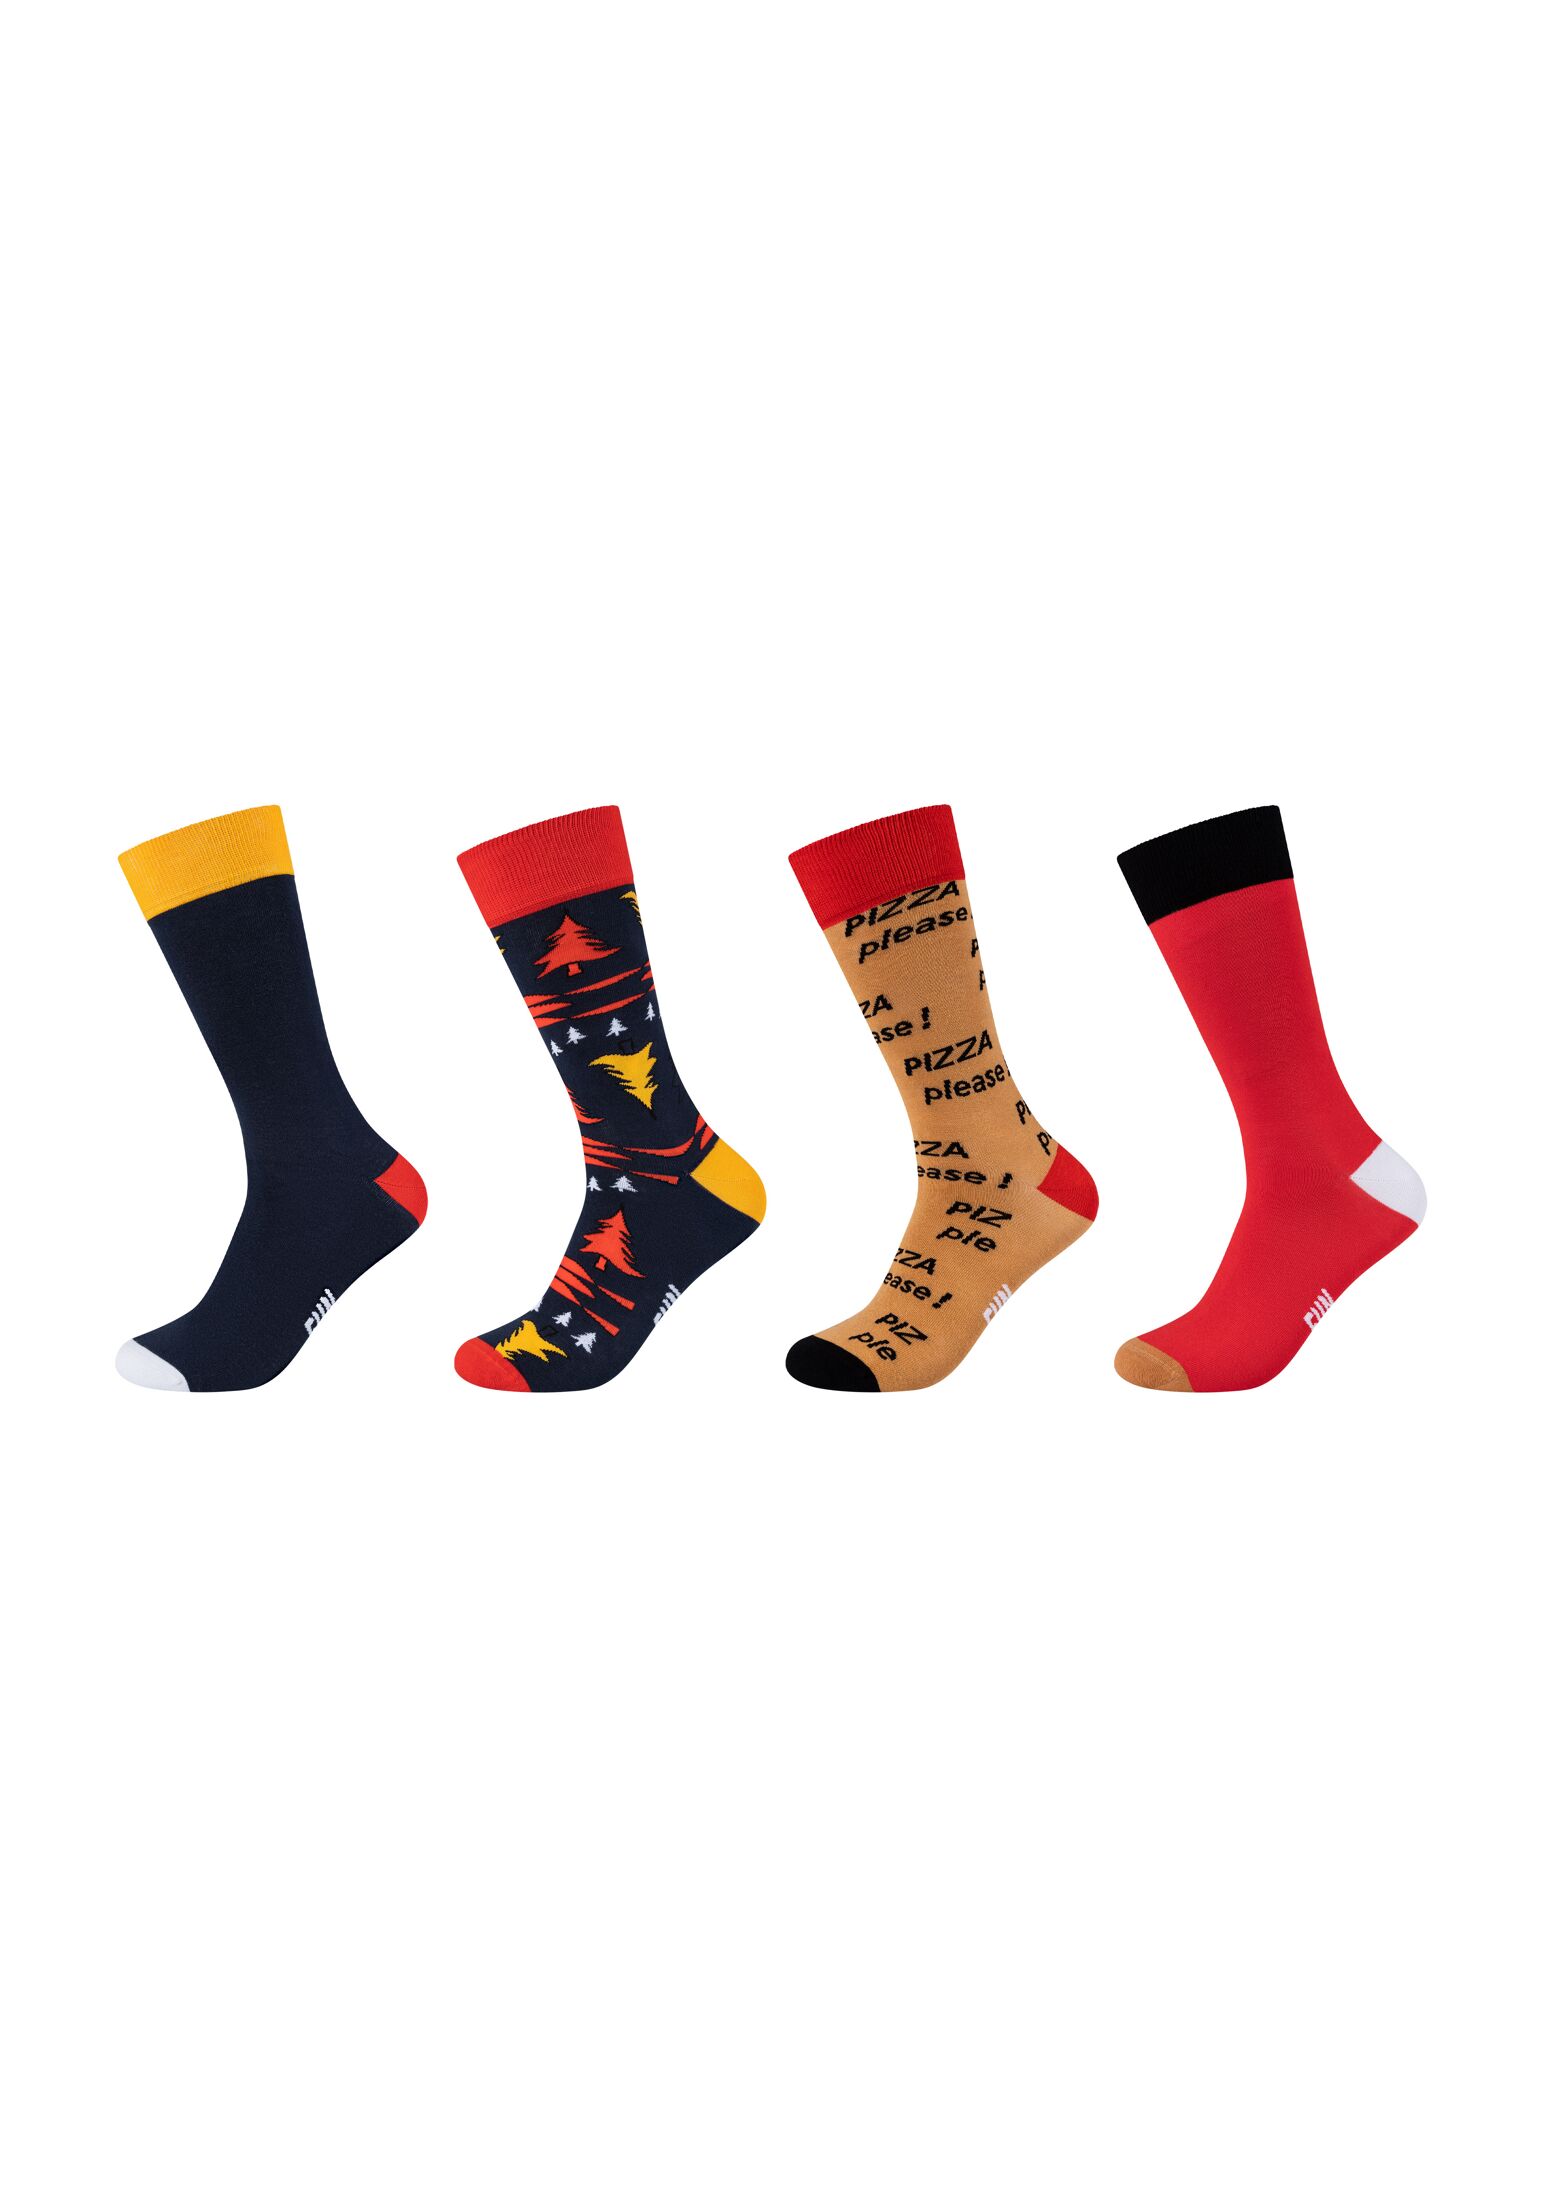 Носки Fun Socks 4 шт graphics, цвет jester red